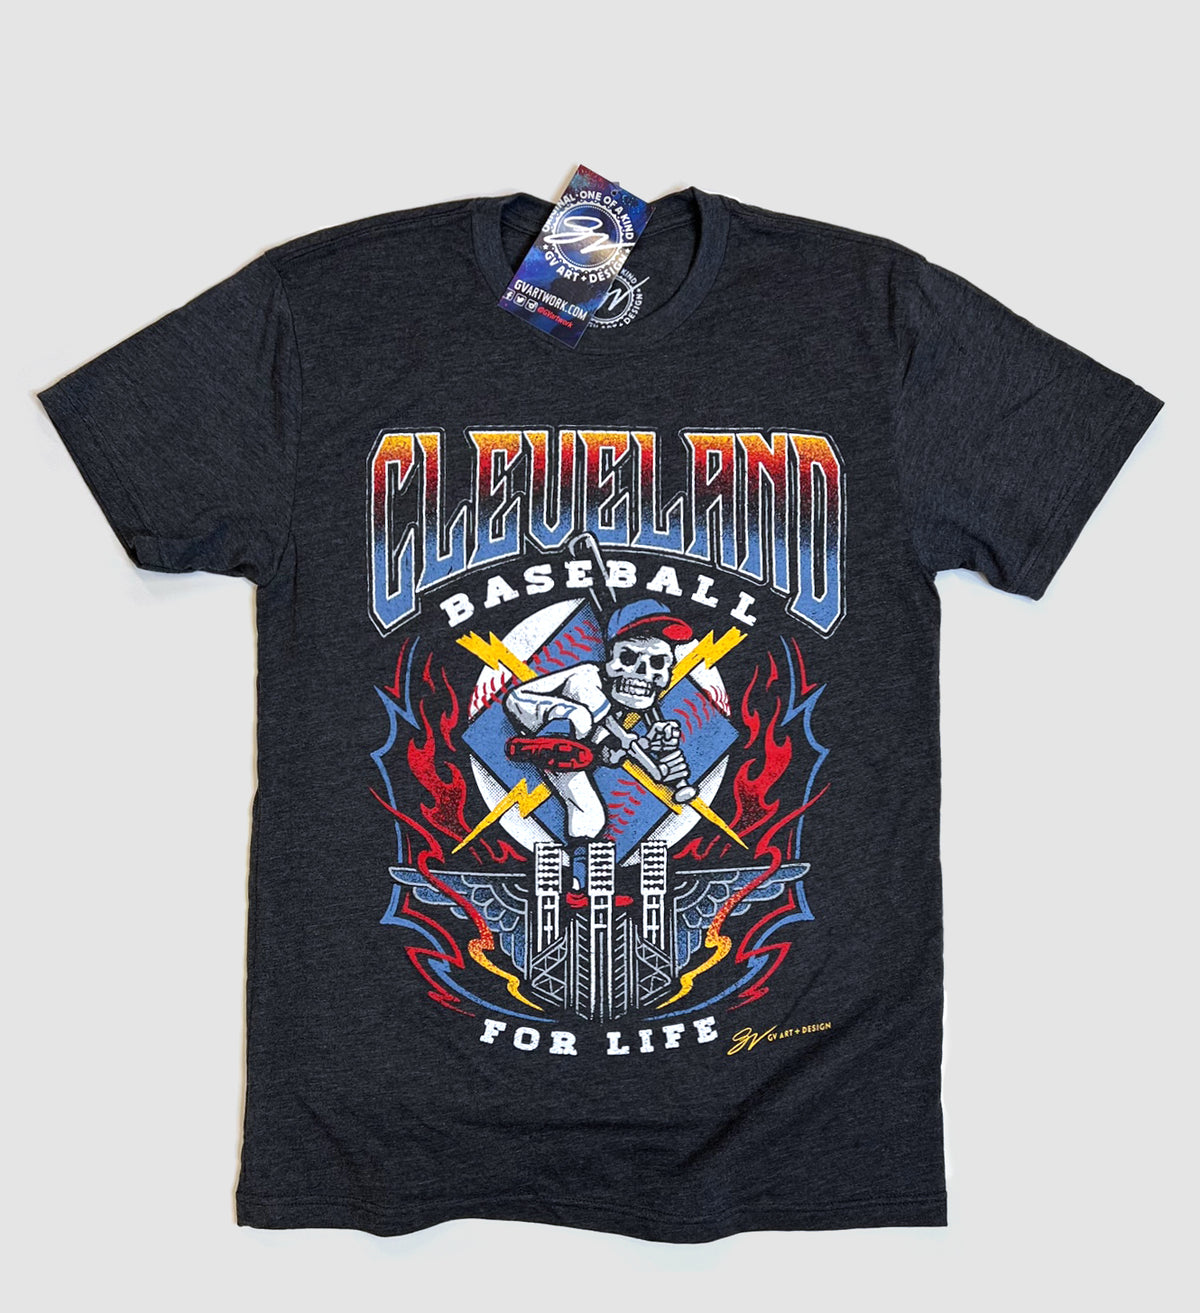 Cleveland Baseball For Life Tour T shirt